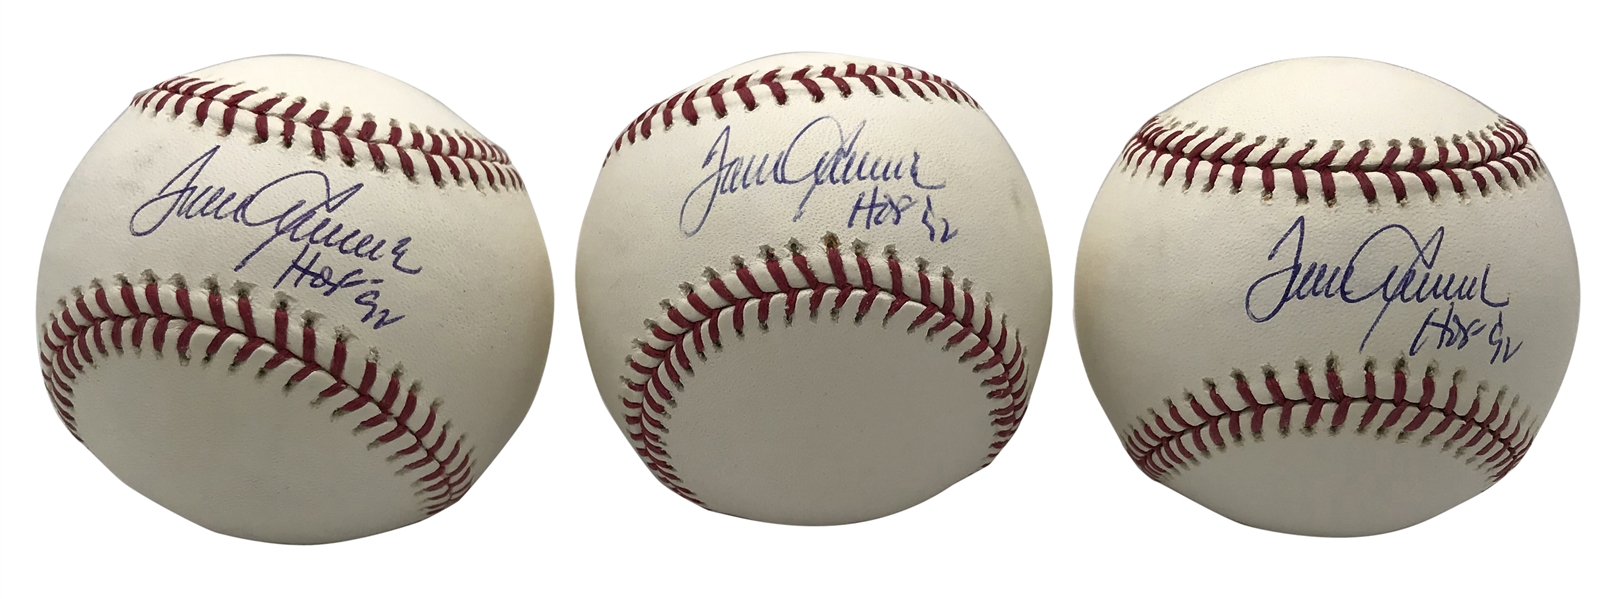 Tom Seaver Lot of Three (3) Signed OML Baseballs w/ "HOF 92" Inscription! (PSA/DNA)